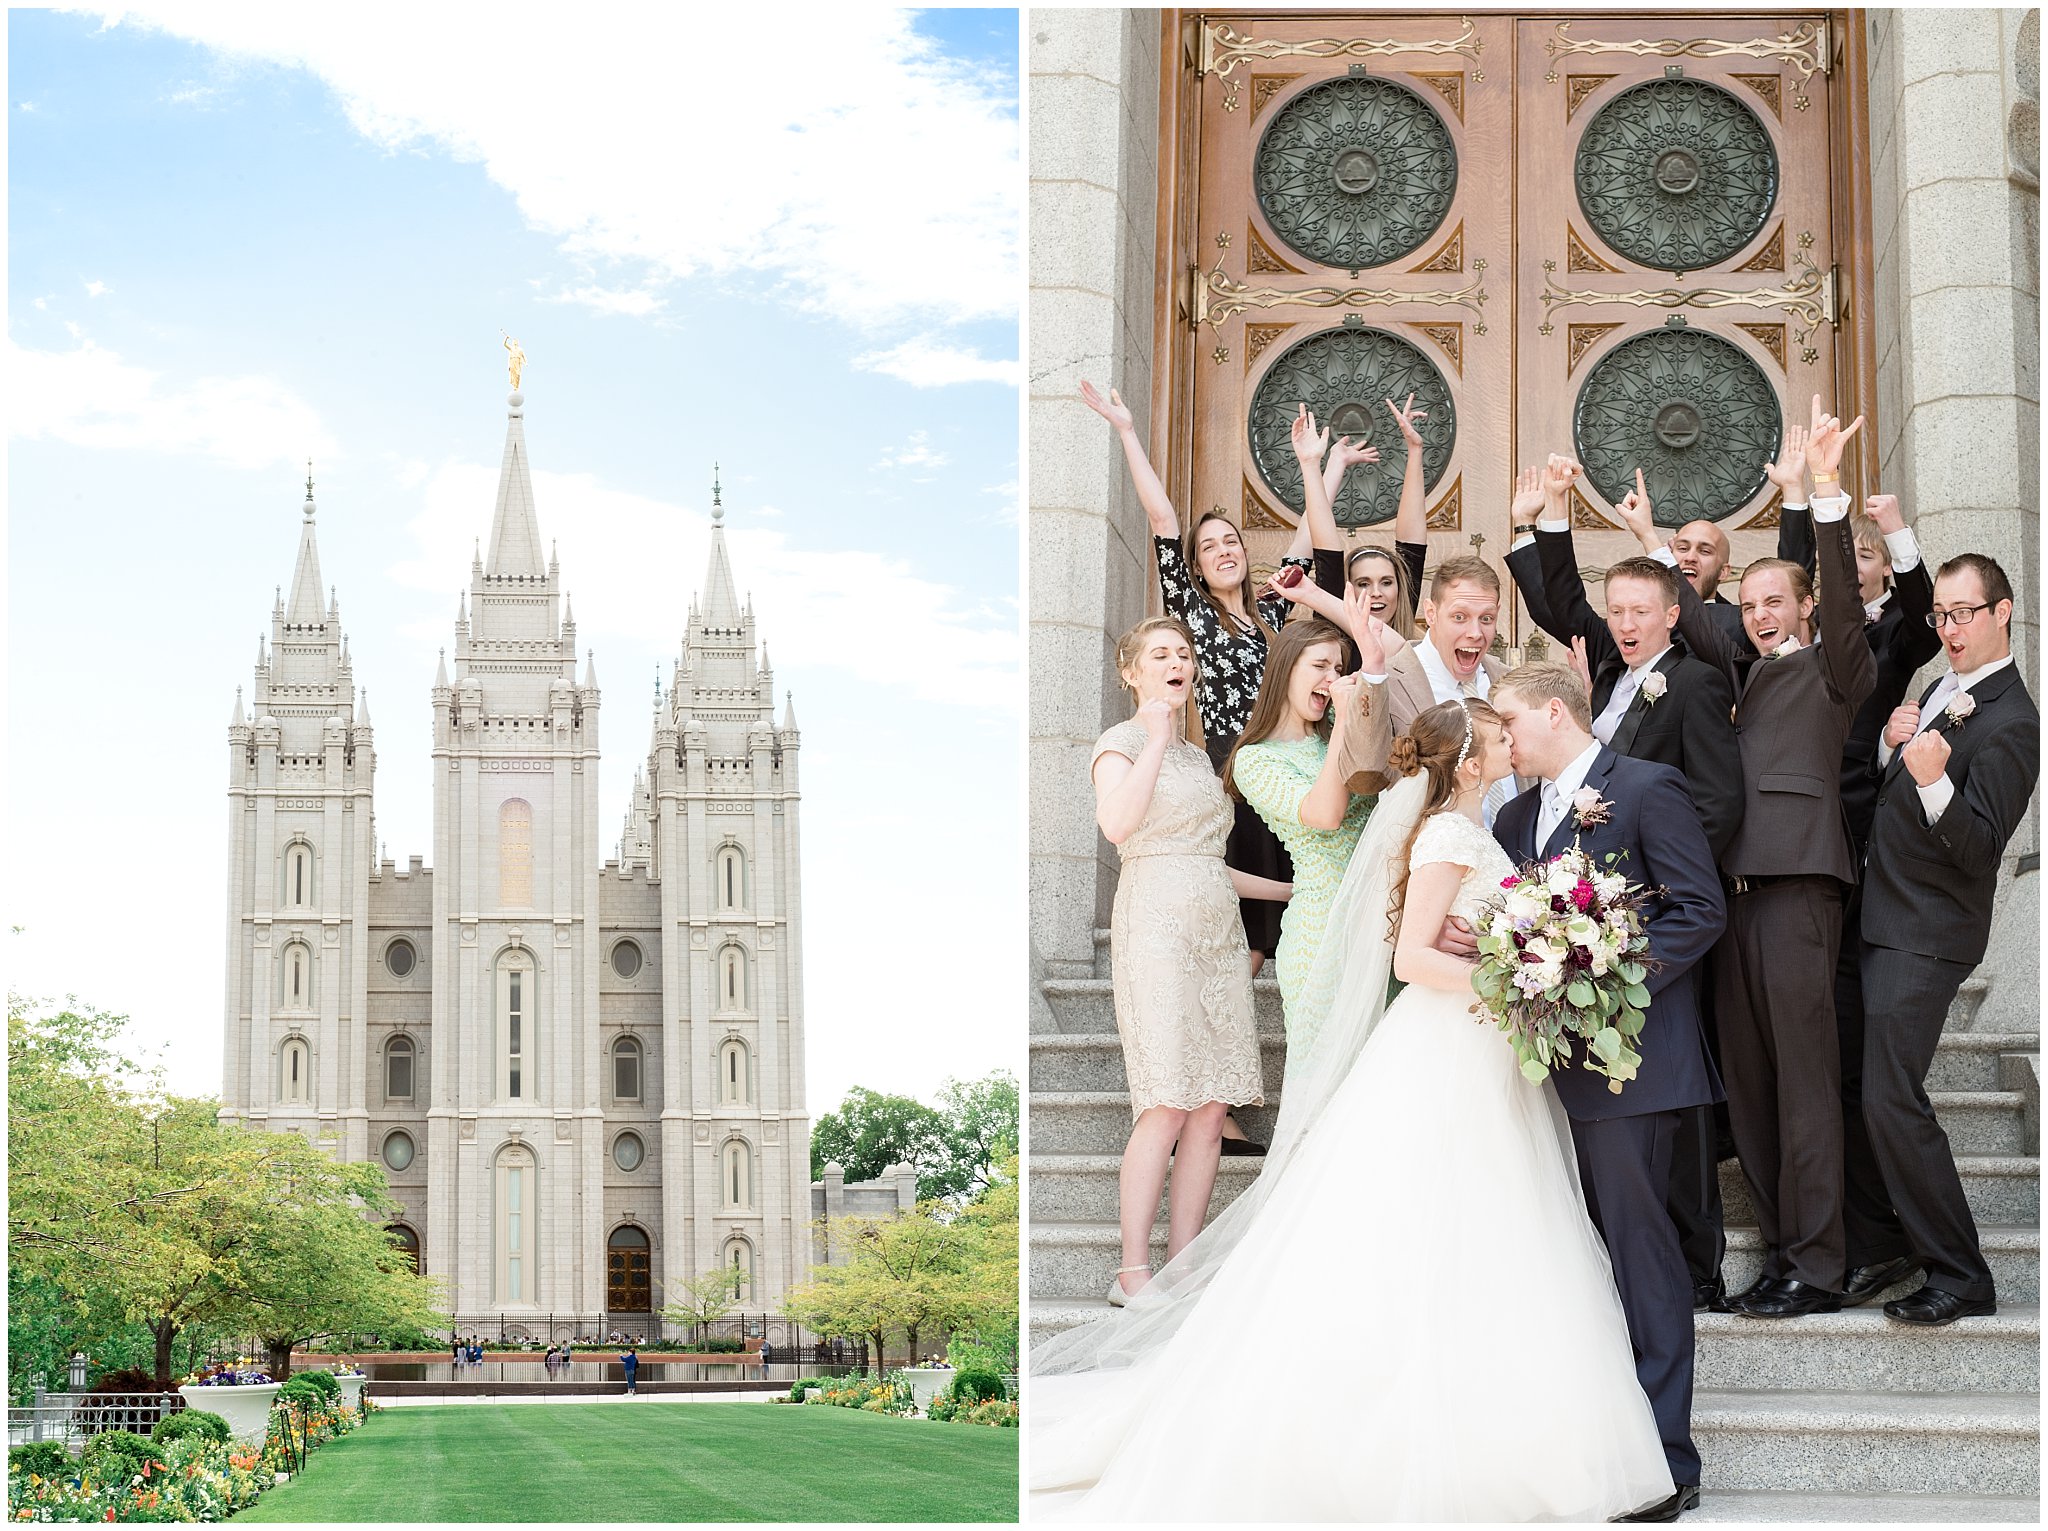 Salt Lake temple summer wedding | bridal party cheering at the salt lake temple